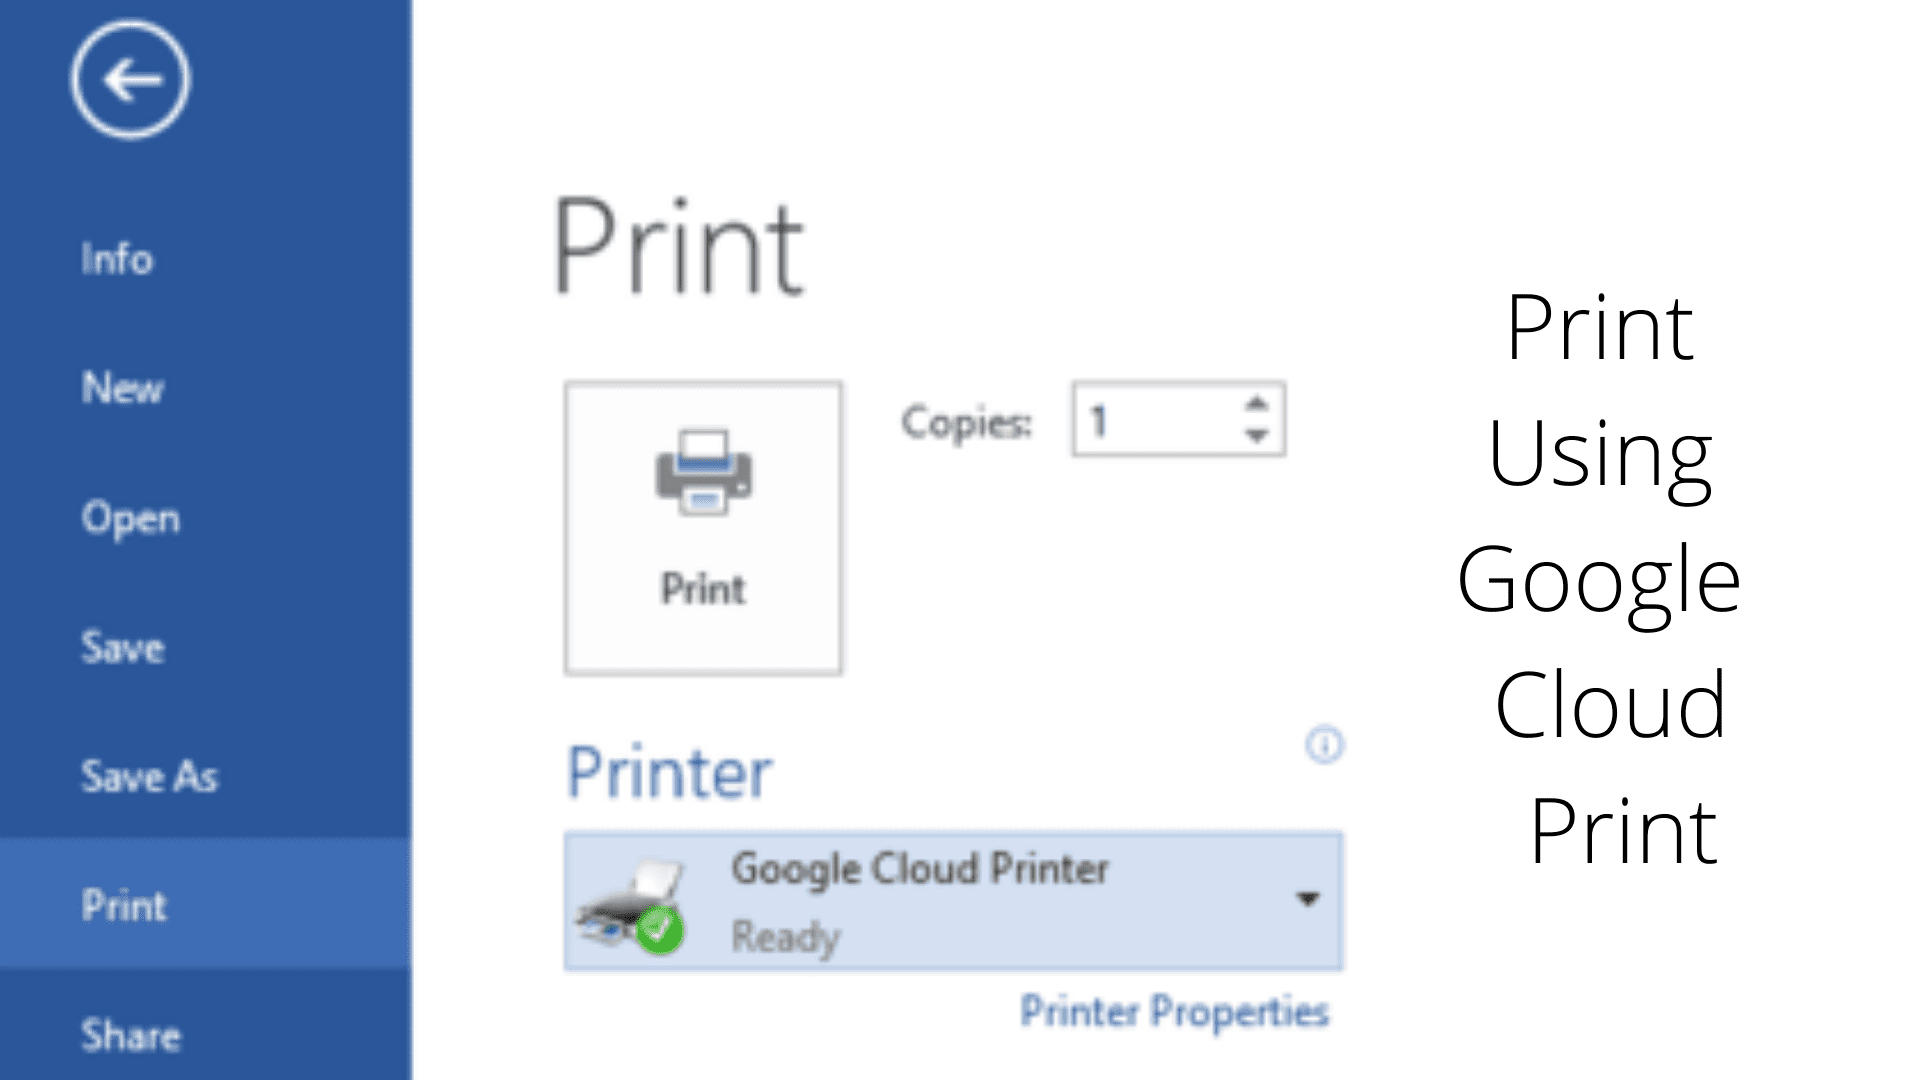 Print Using Google Cloud Print